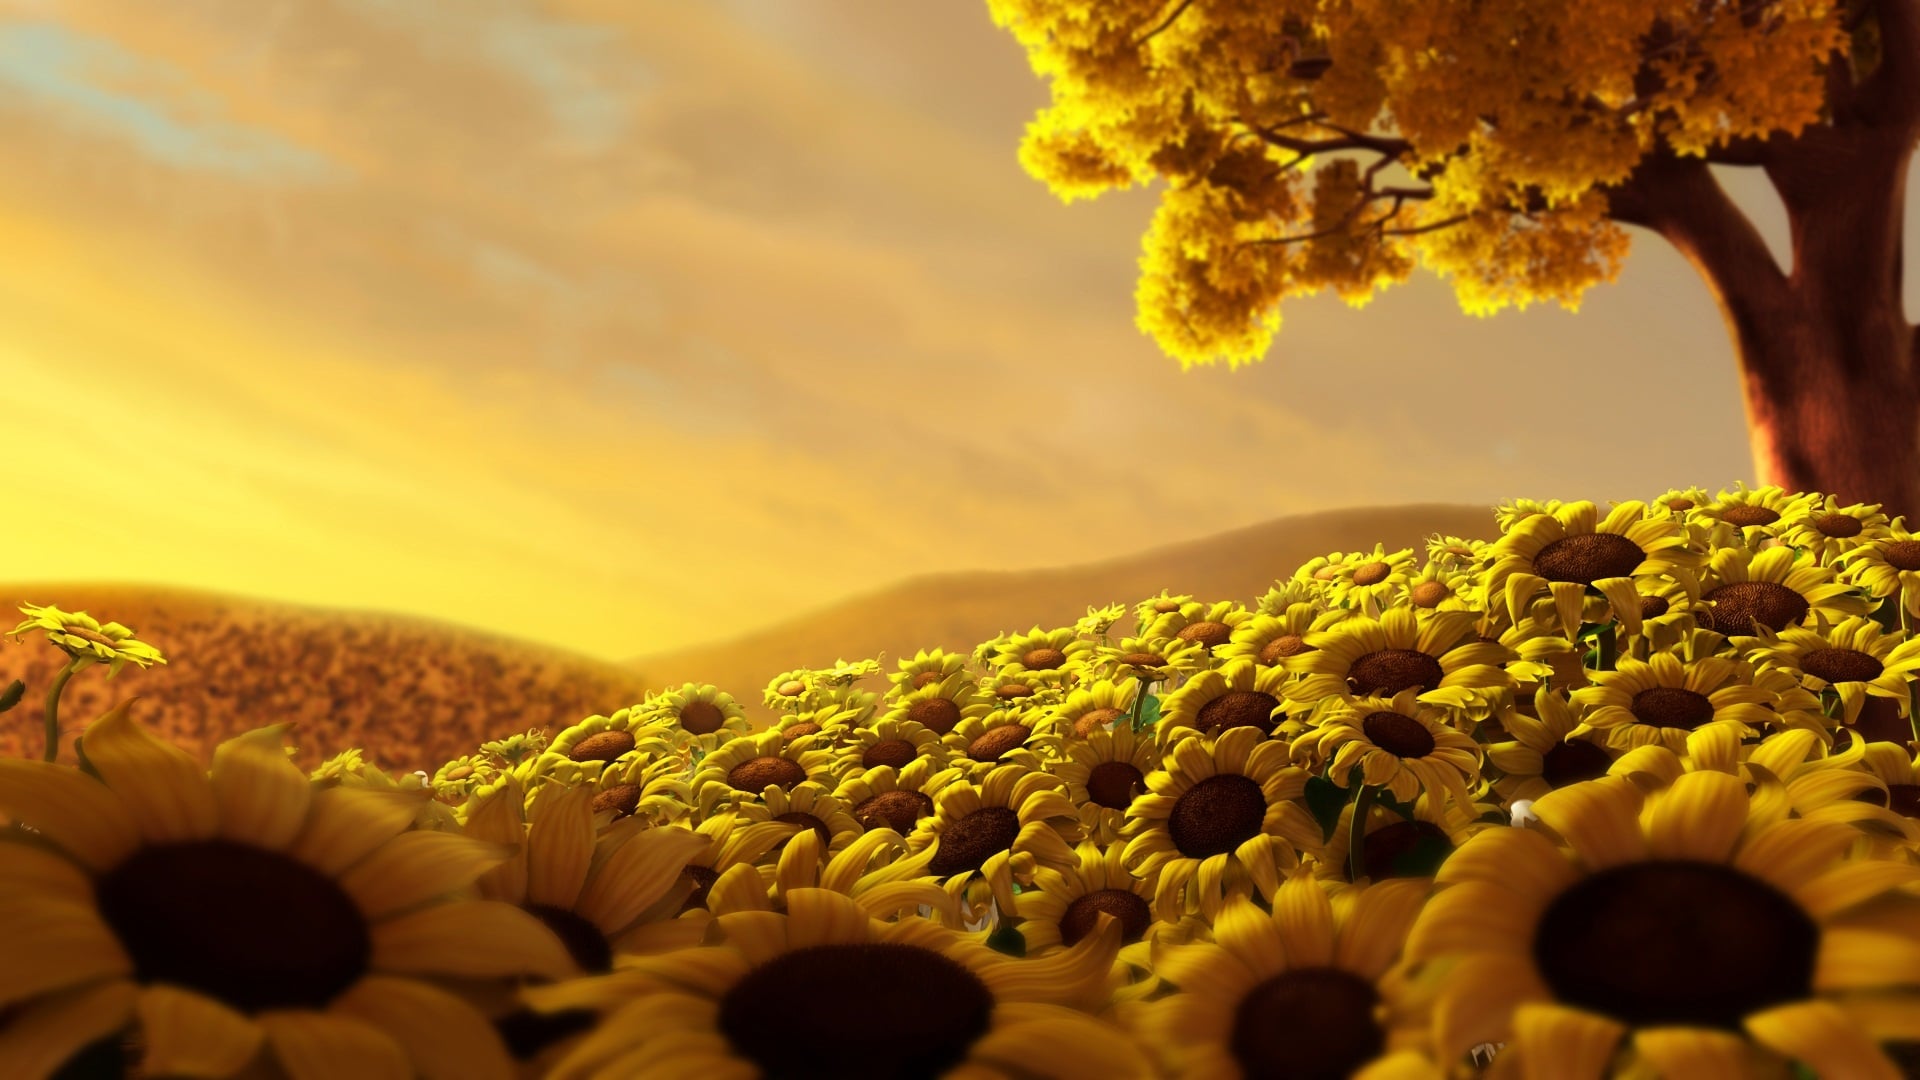 Sunflower Landscapes